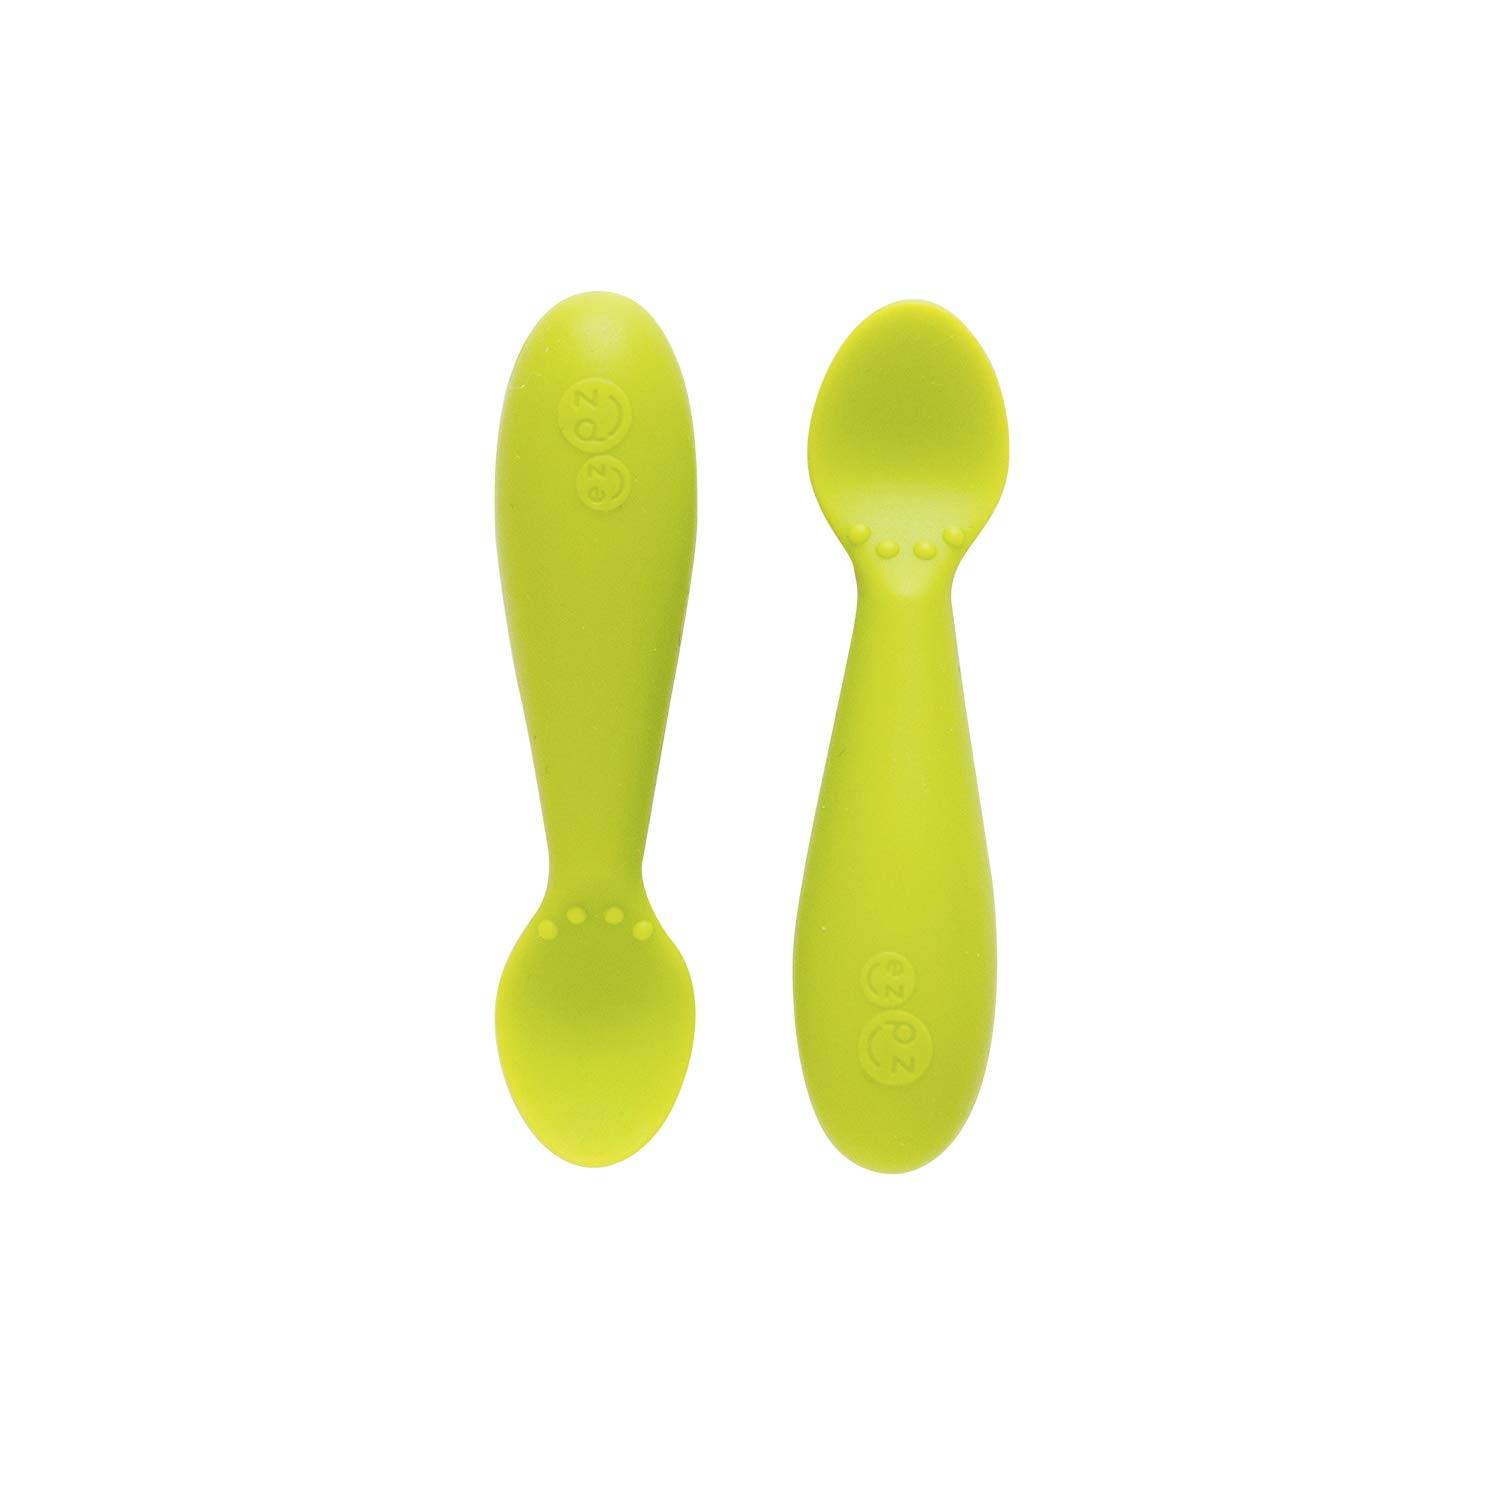 ezpz Tiny Spoon Twin Pack - Lime